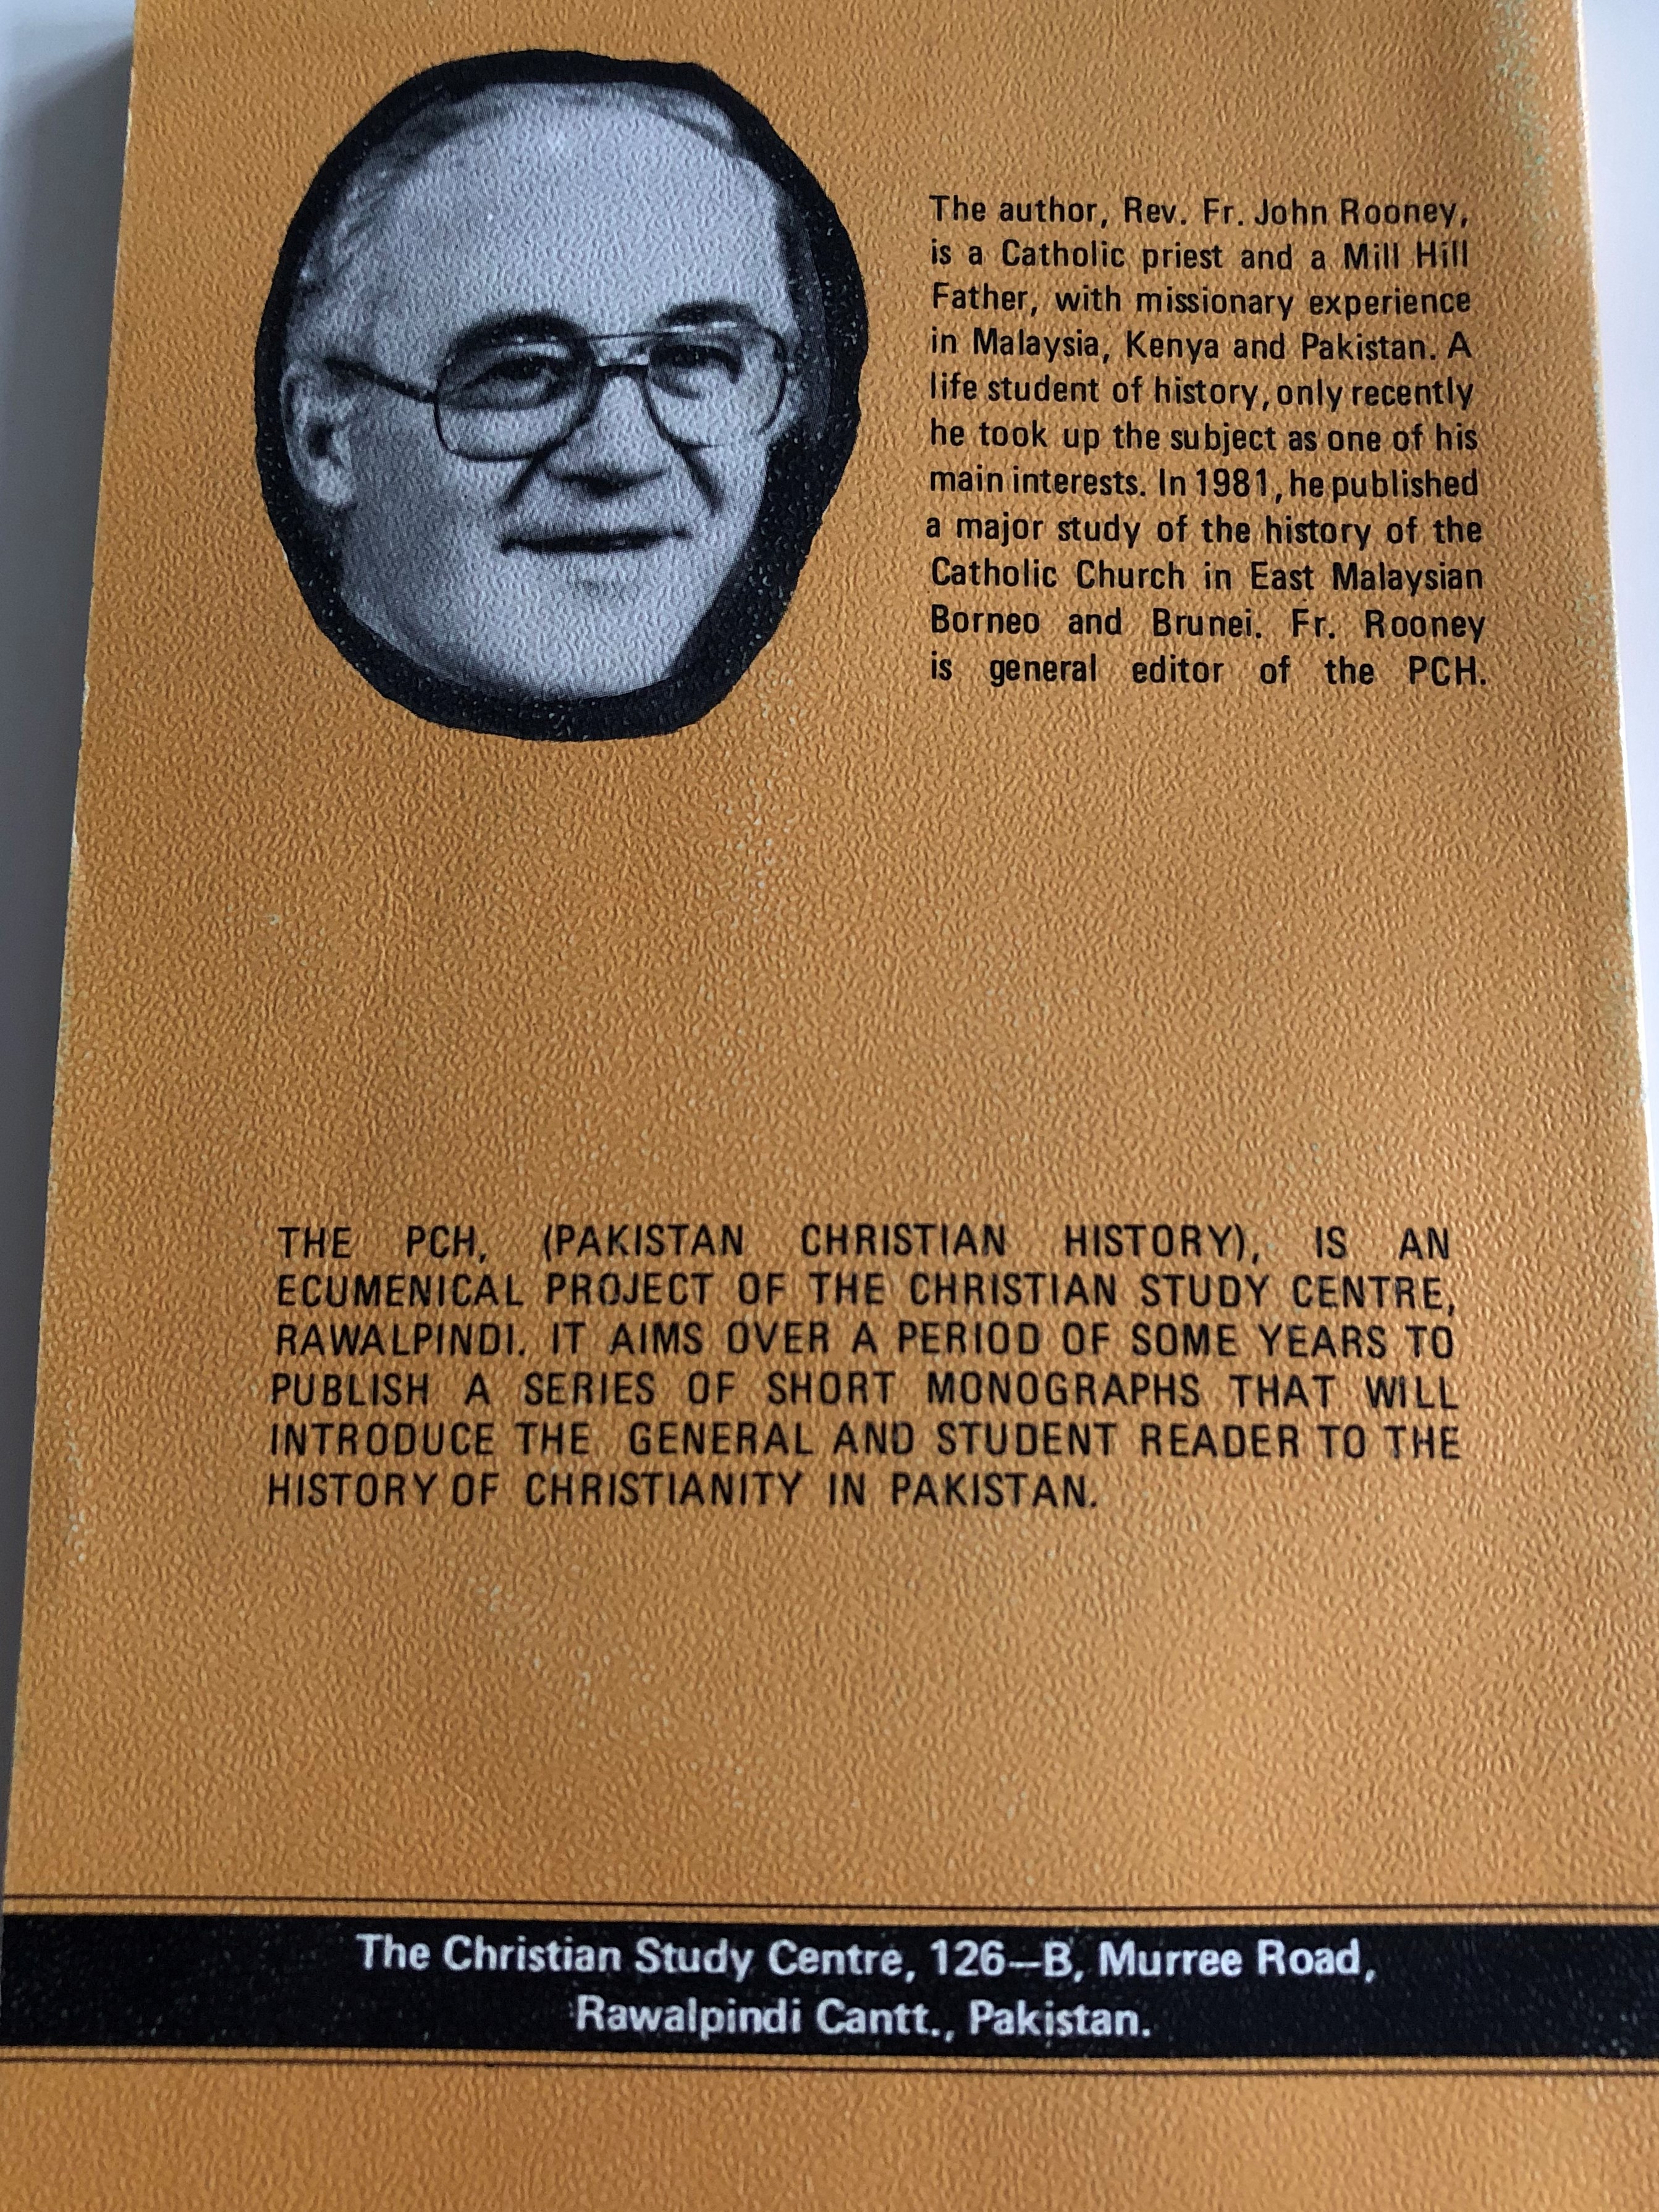 shadows-in-the-dark-by-john-rooney-m.h.m-pakistan-christian-history-monography-no.-1-christian-study-centre-rawalpindi-1984-11-.jpg